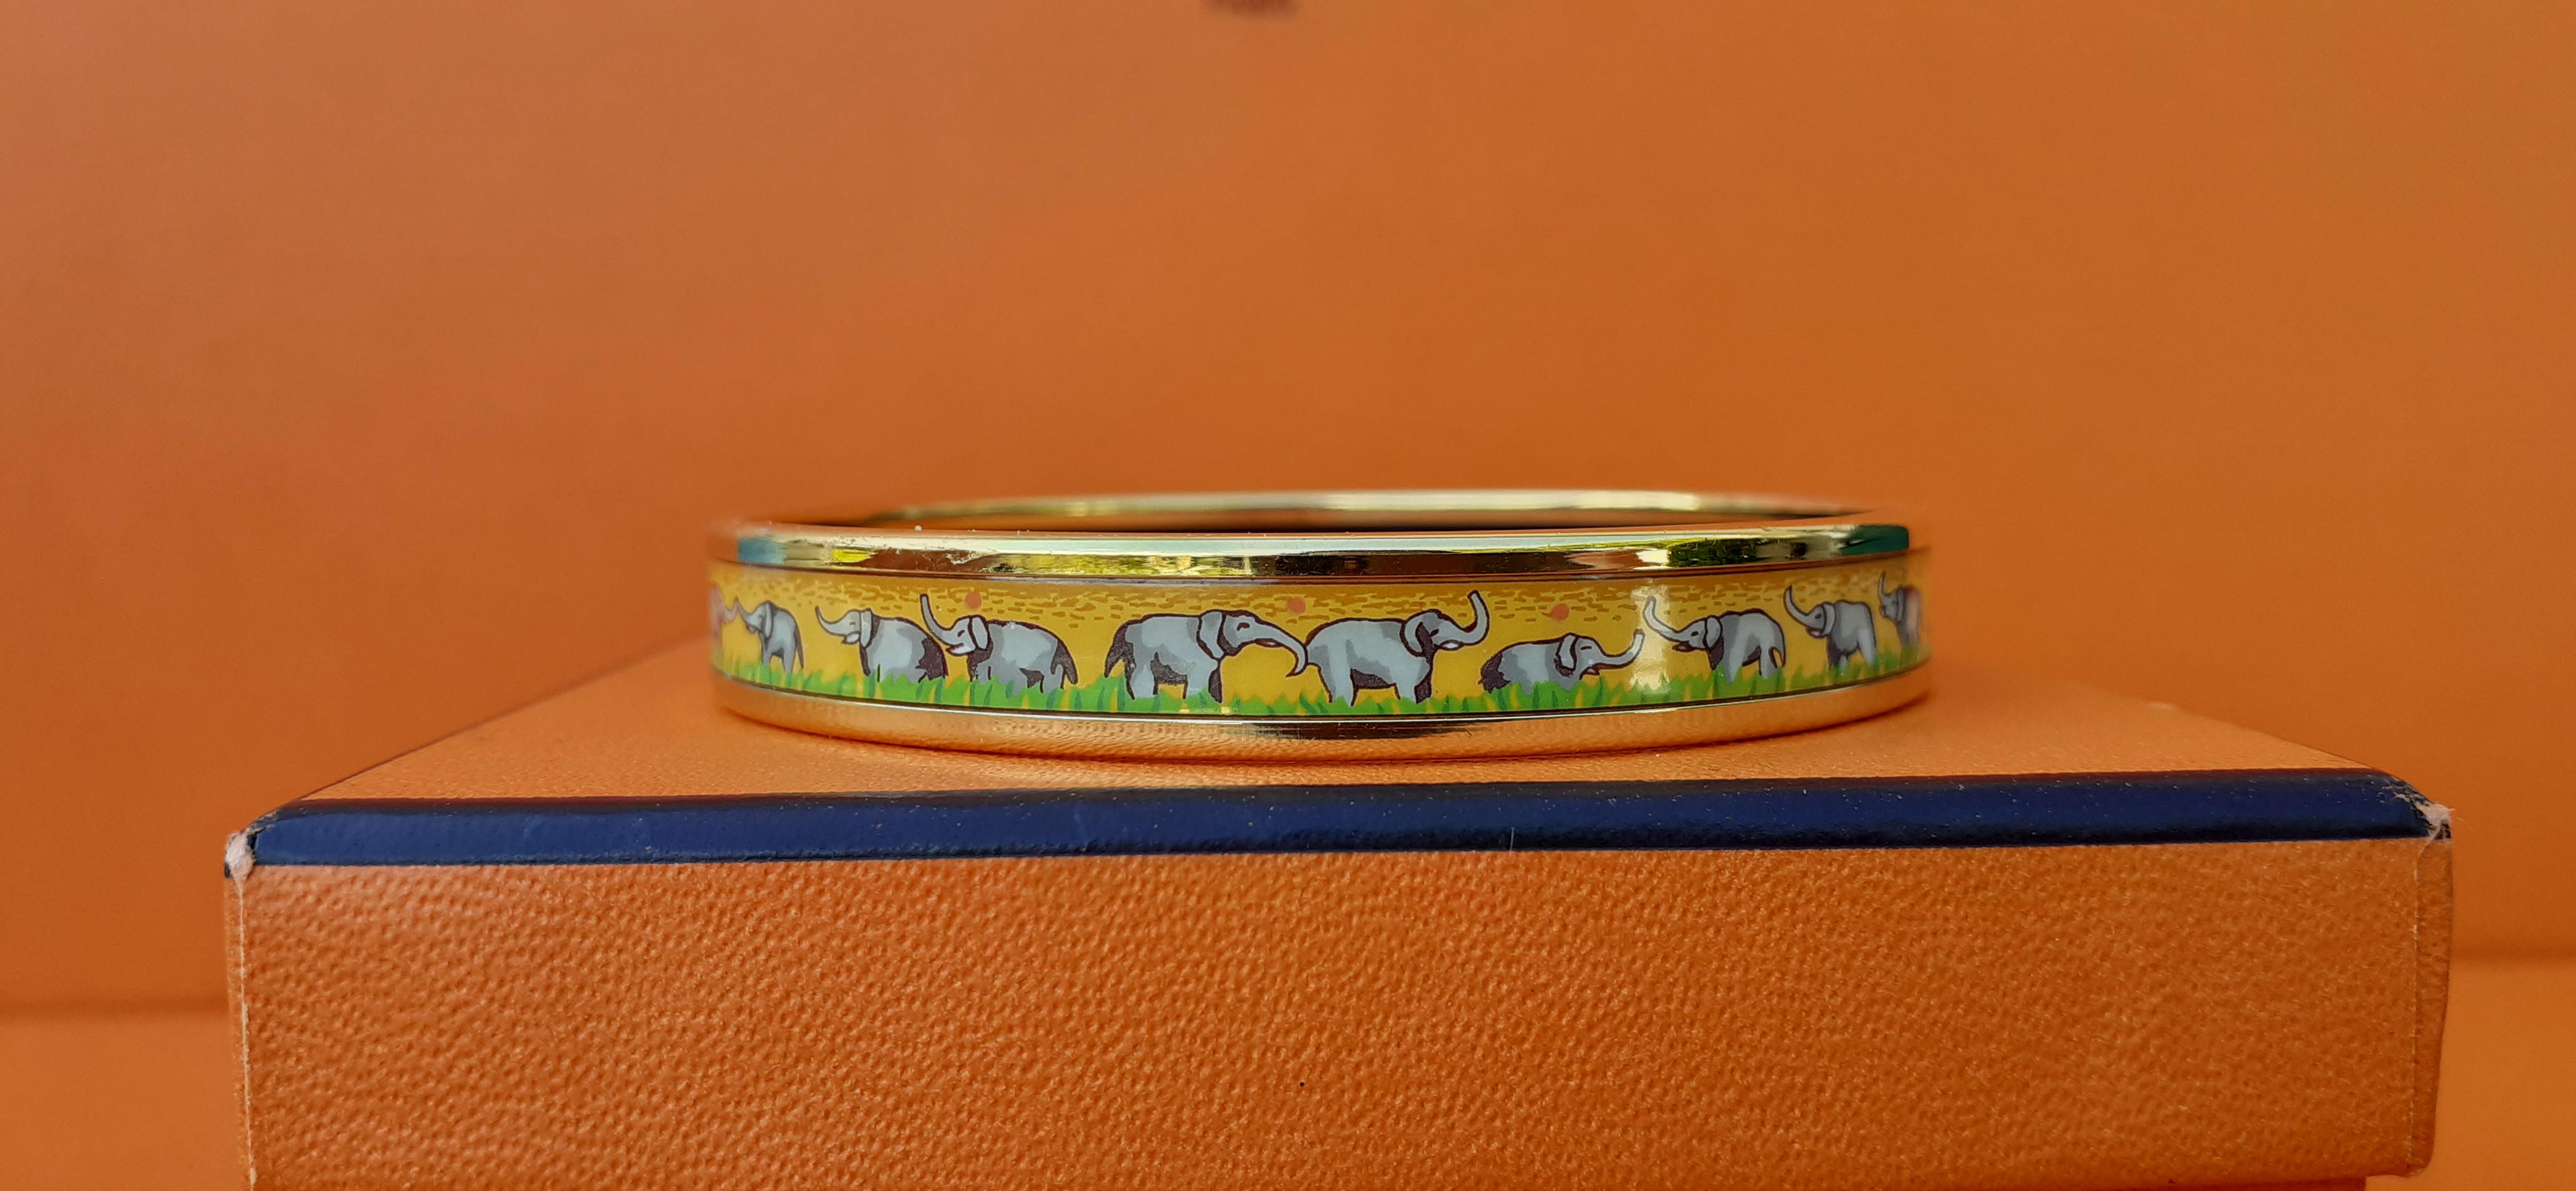 Hermès Enamel Printed Bracelet Elephants Grazing Yellow Ghw Narrow Size 65 1